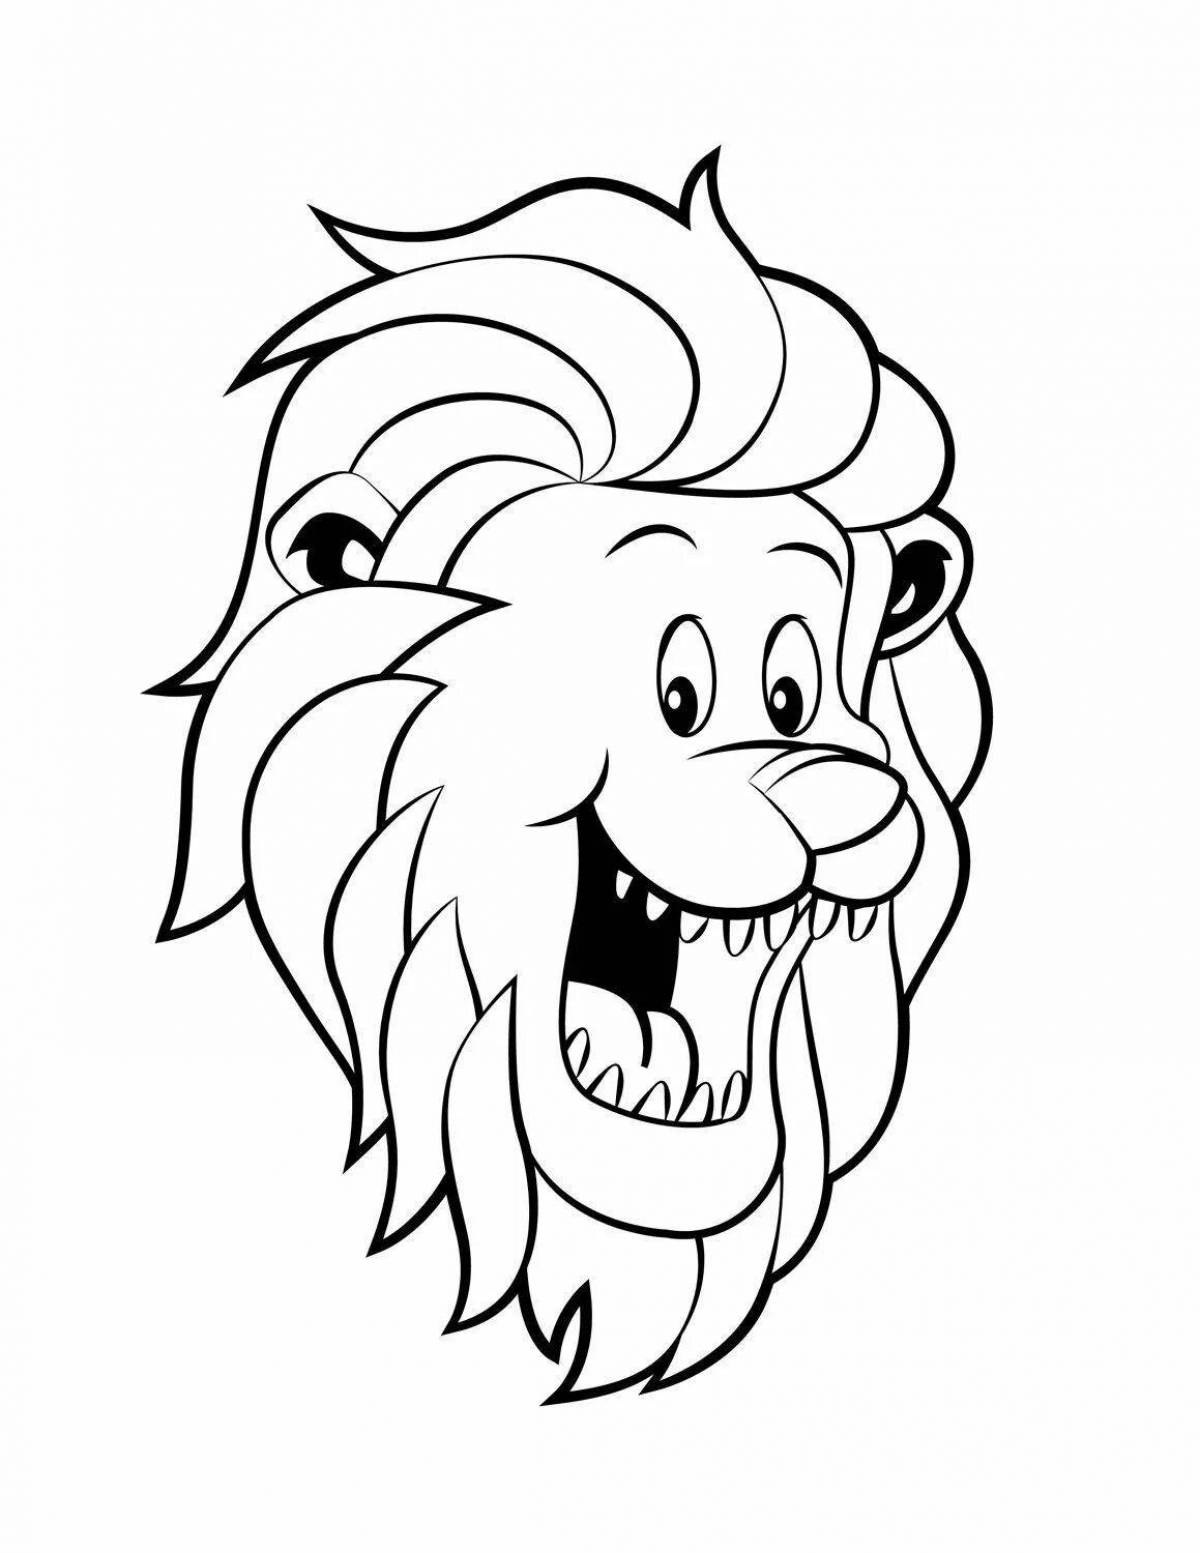 Fat lion coloring page